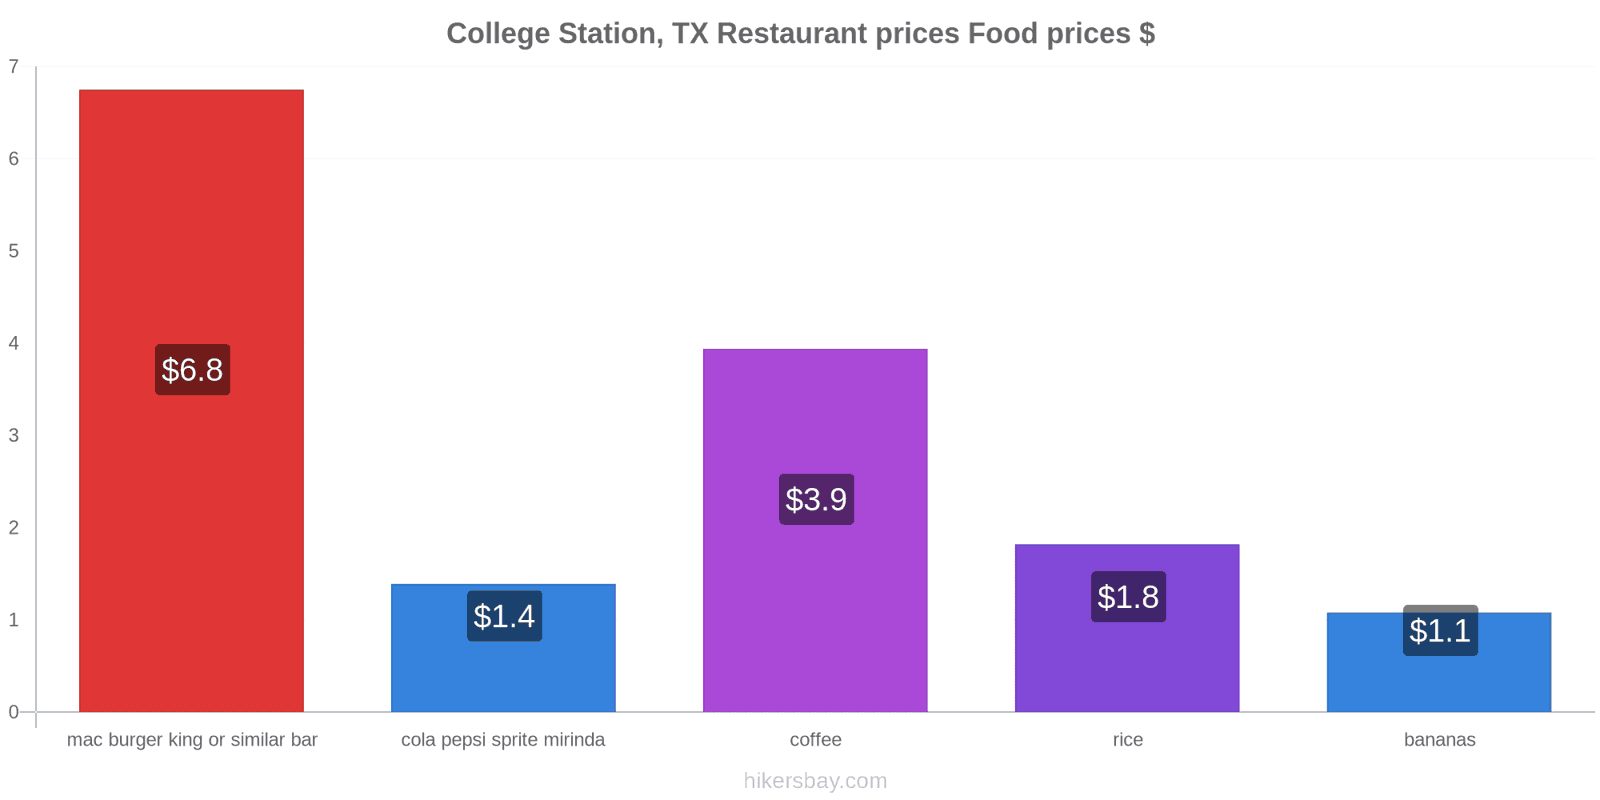 College Station, TX price changes hikersbay.com